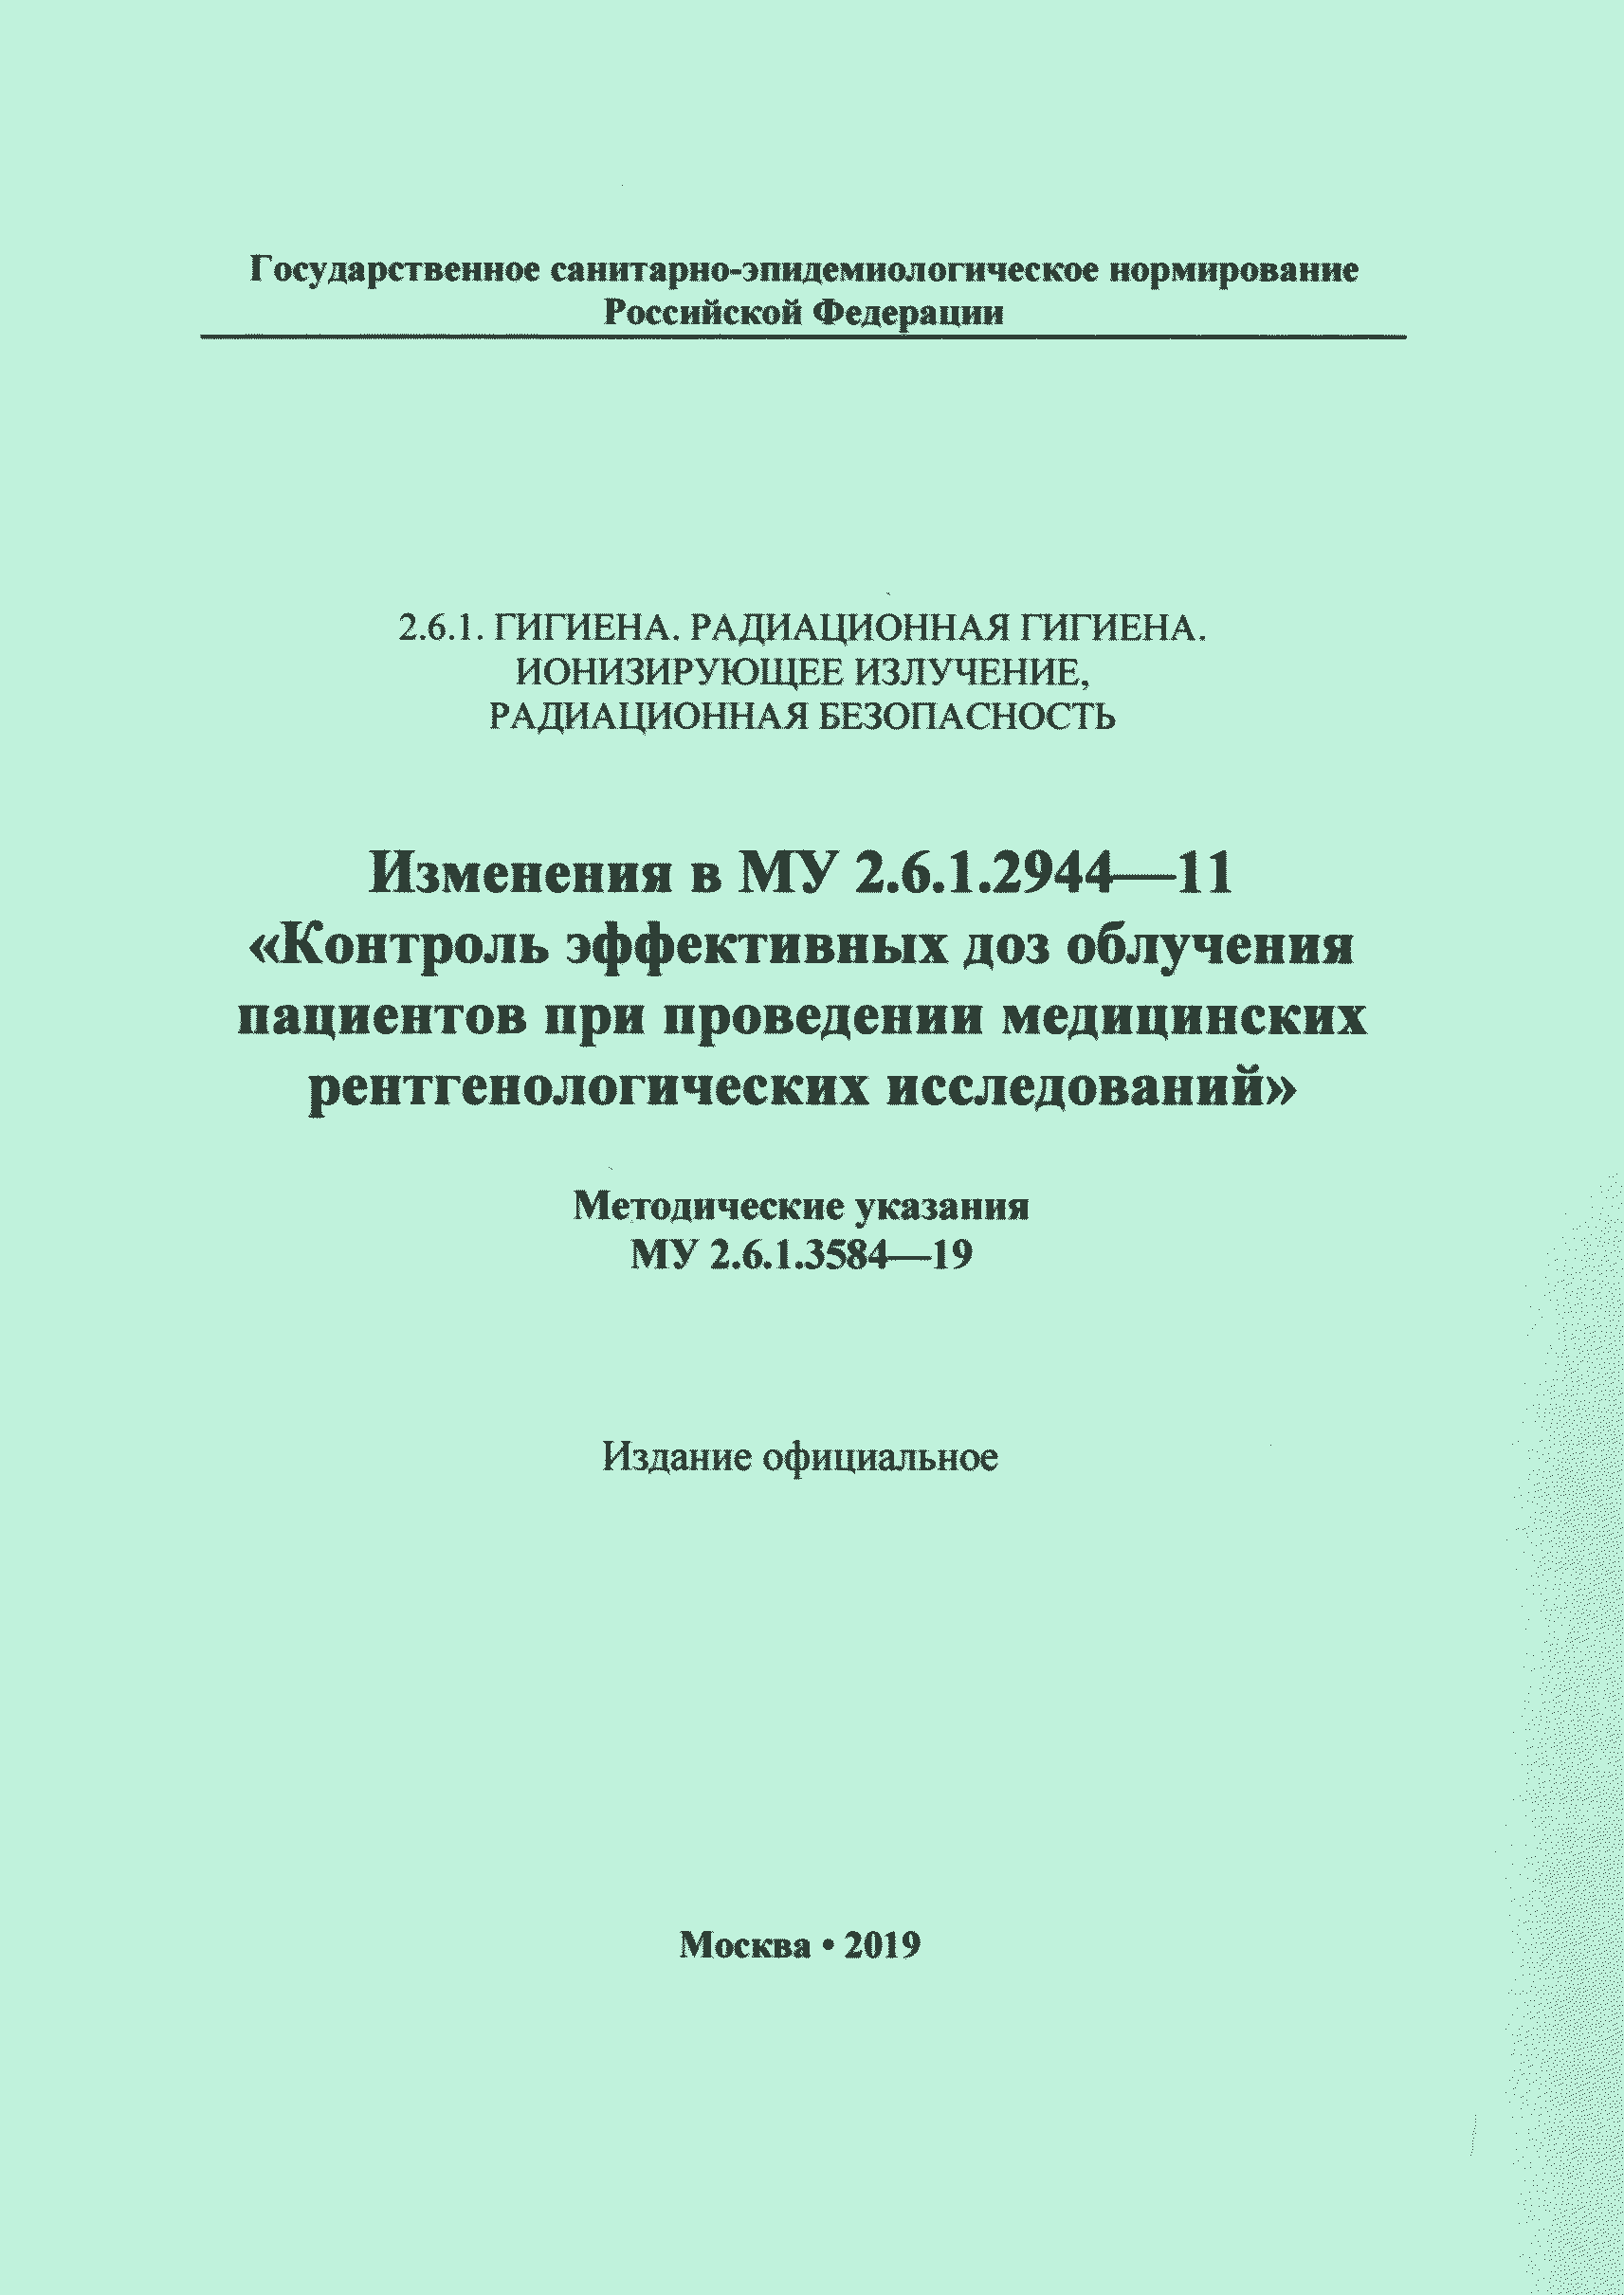 № МУ 2.6.1.3584-19